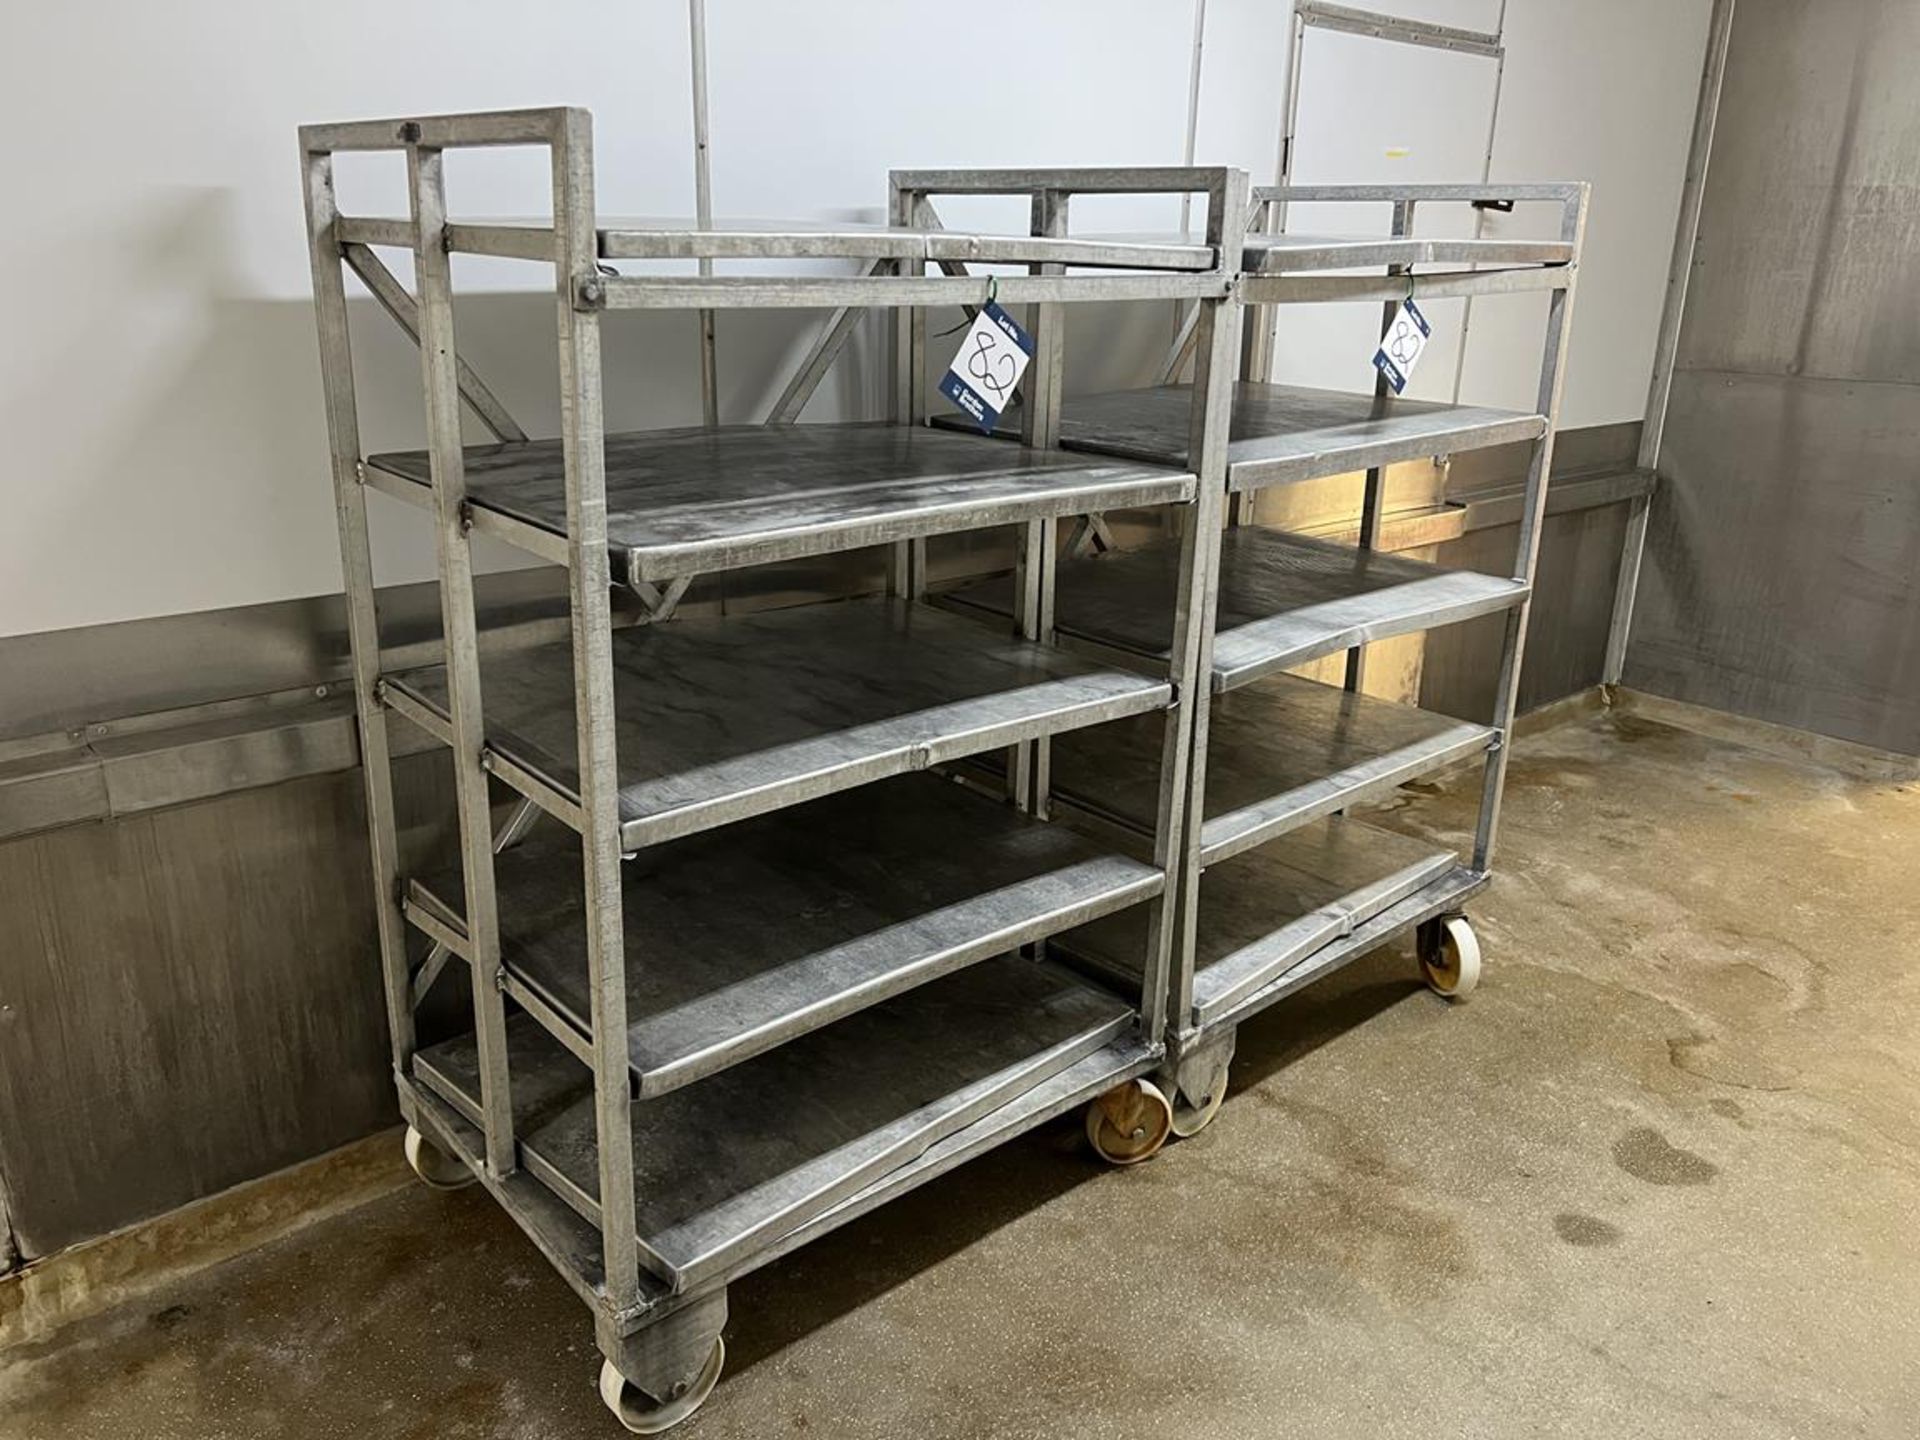 2x (no.) Aluminium five tier storage racks with trays, c. 750mm(W) x 950mm (L) x 1640mm (H)